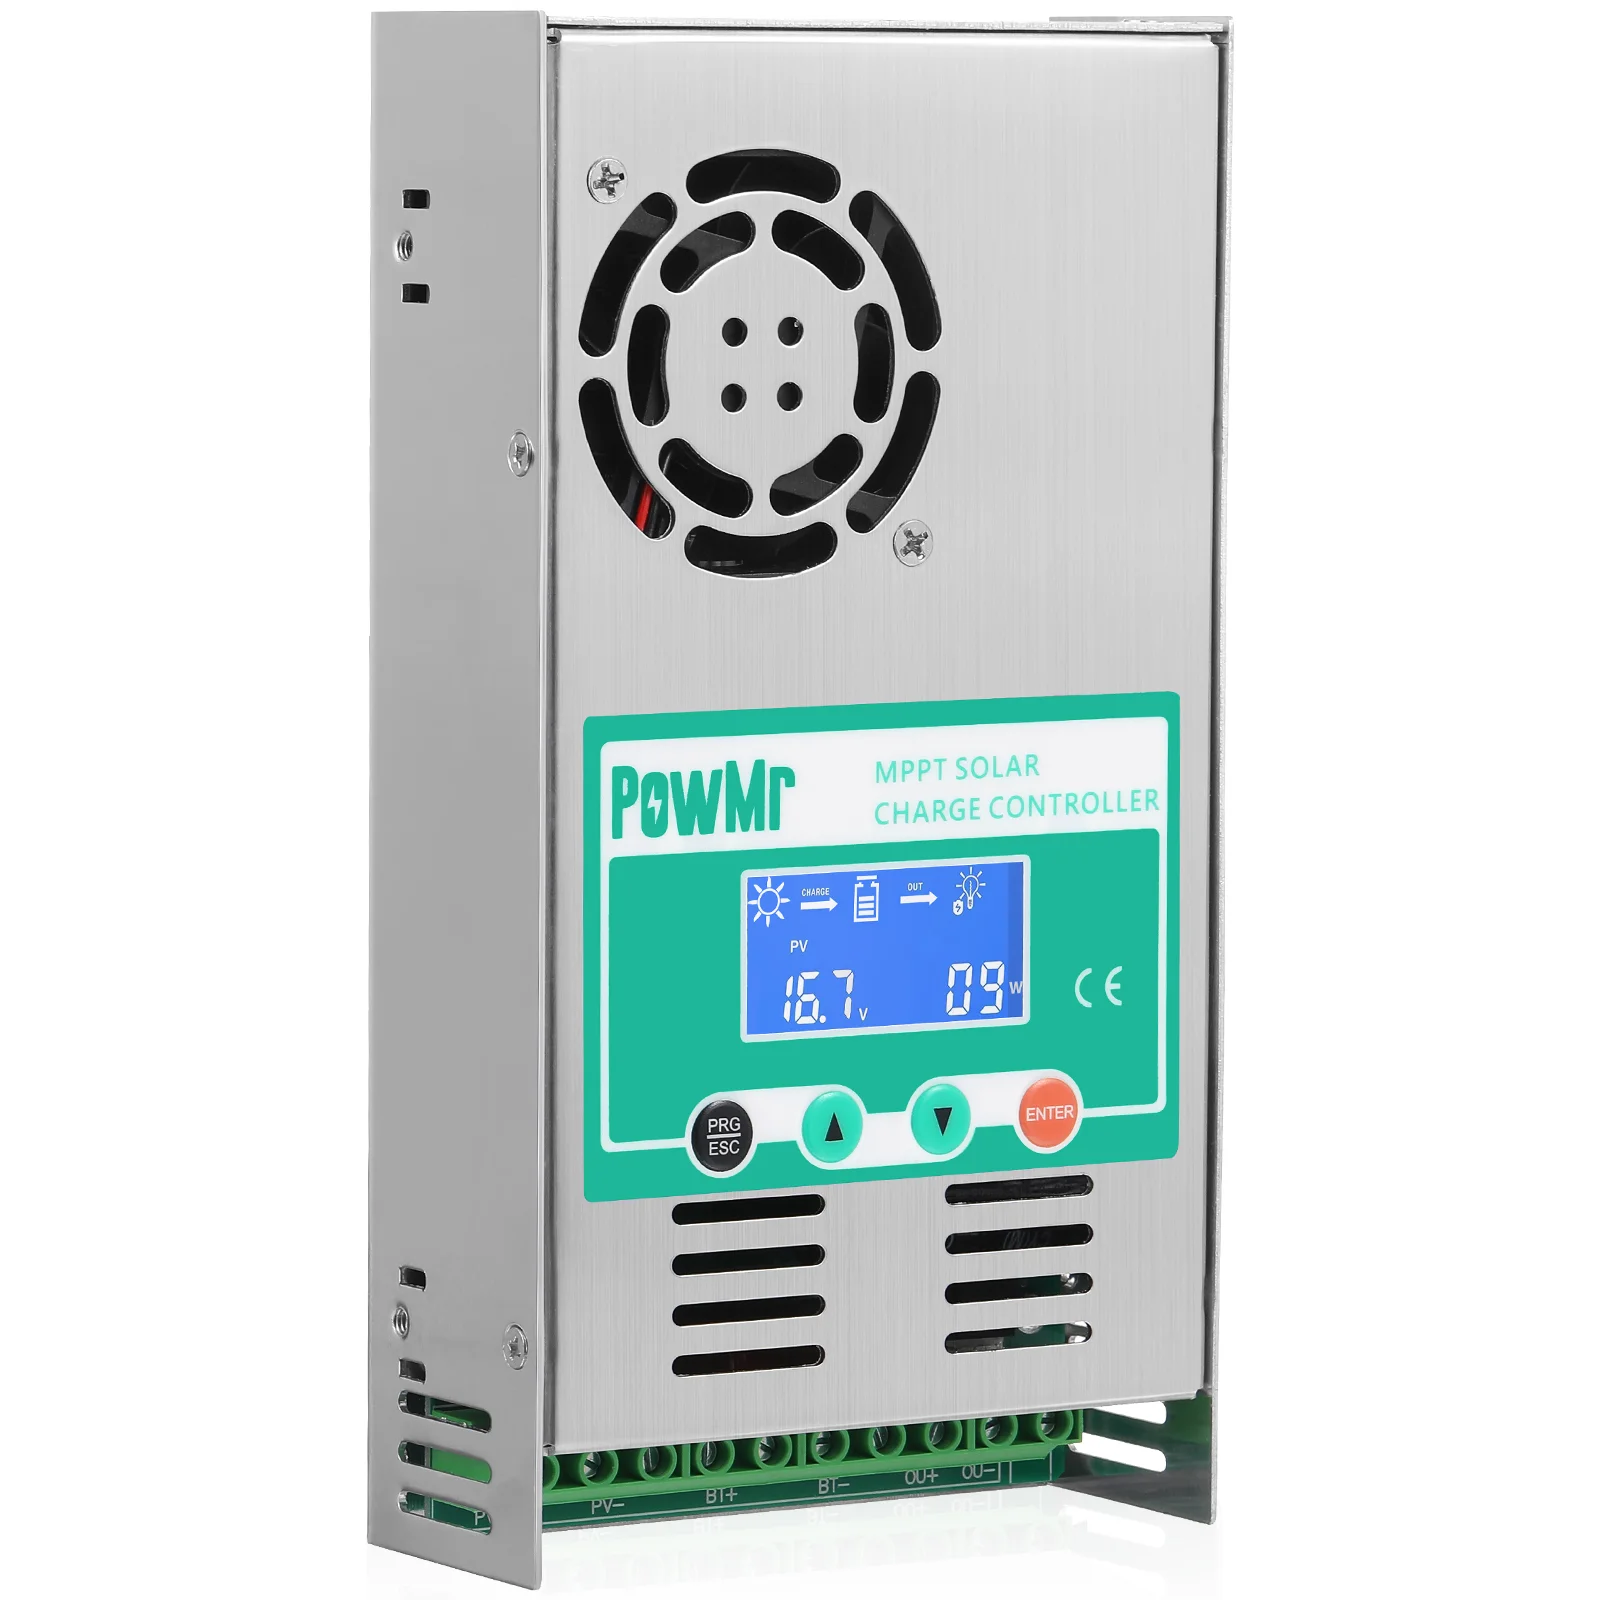 

Solar Power Mppt Controller 60a 12v-48v Photovoltaic RV Home Energy Storage System (hhj-60a) Charge